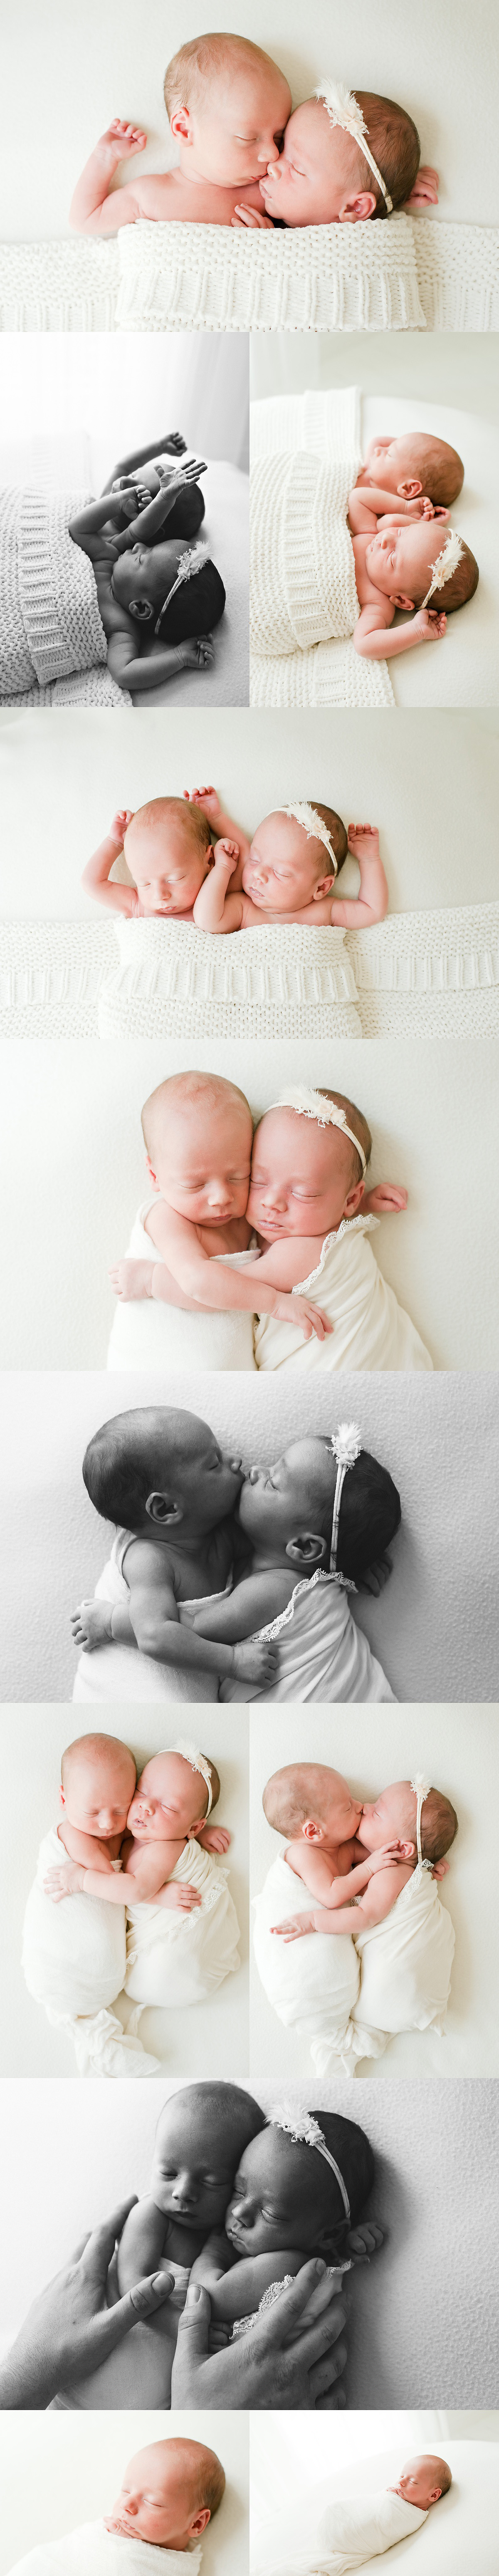 newborn babies wrap their arms around each other